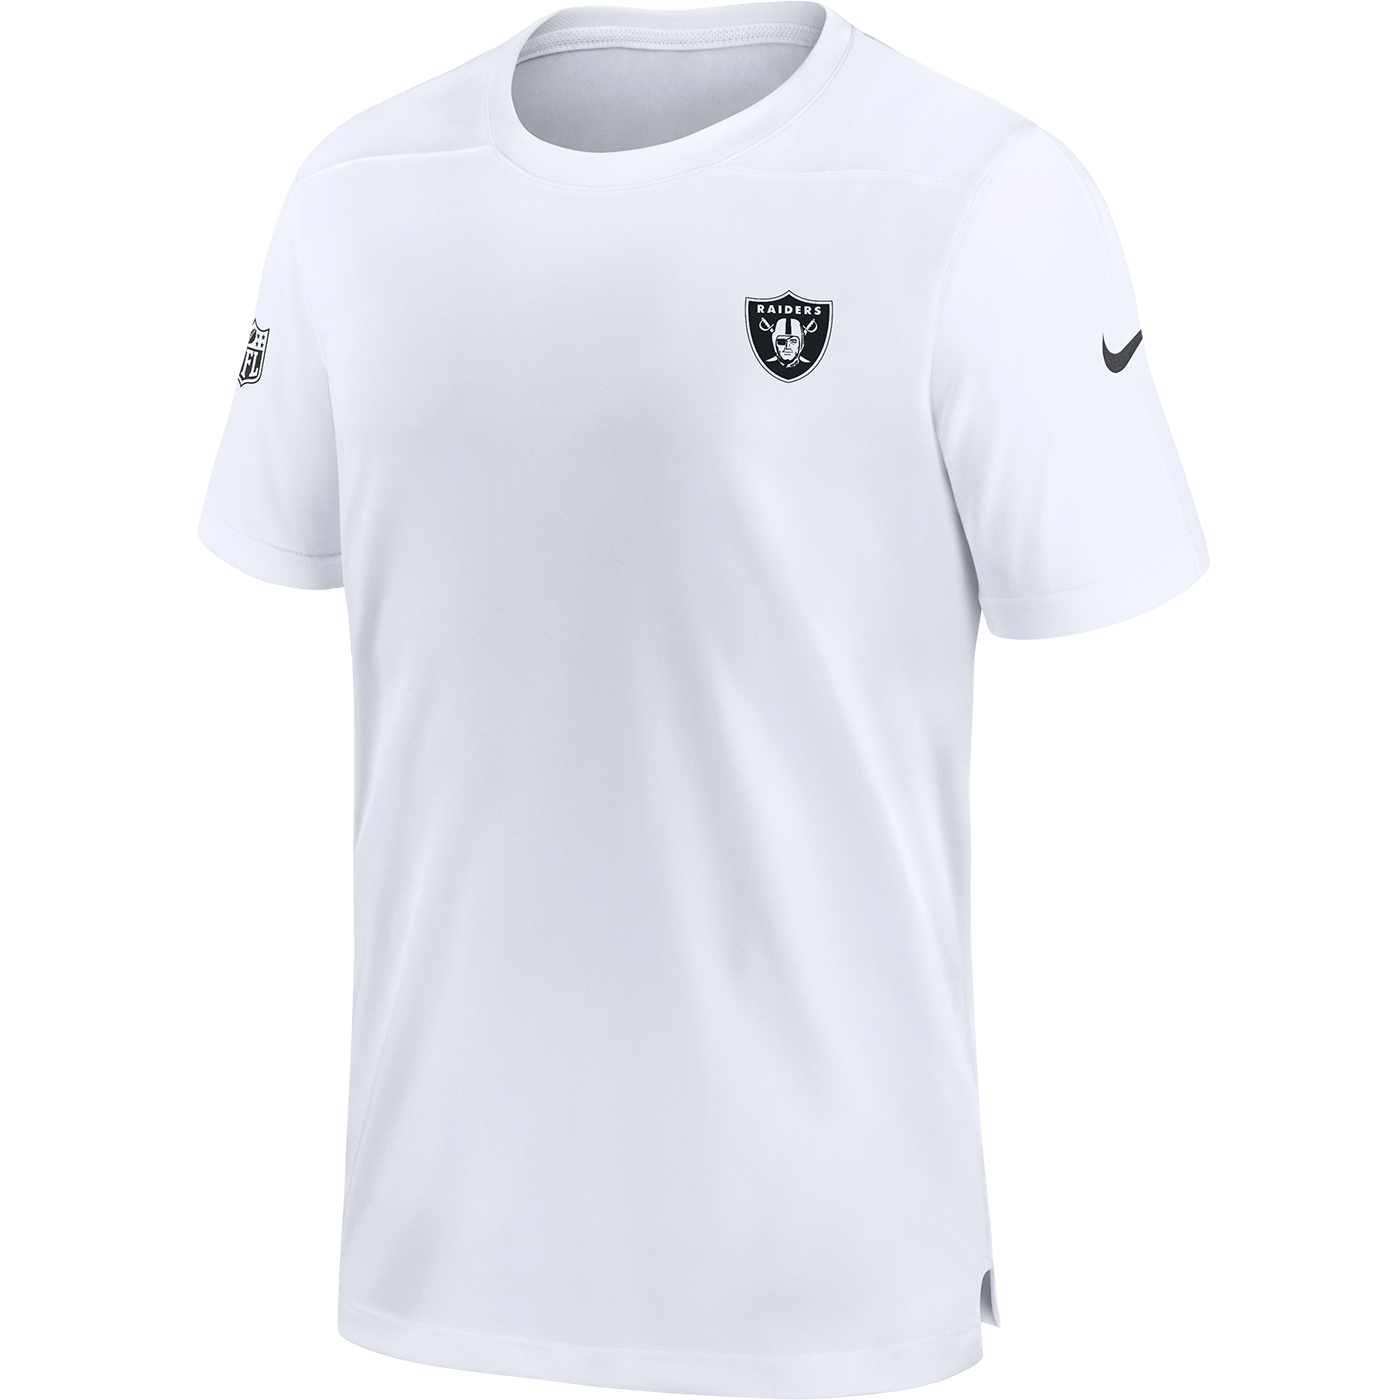 Las Vegas Raiders Sideline Coach Men’s Nike Men's Dri-FIT NFL Polo in Black, Size: Small | 00MG00A8D-0BW